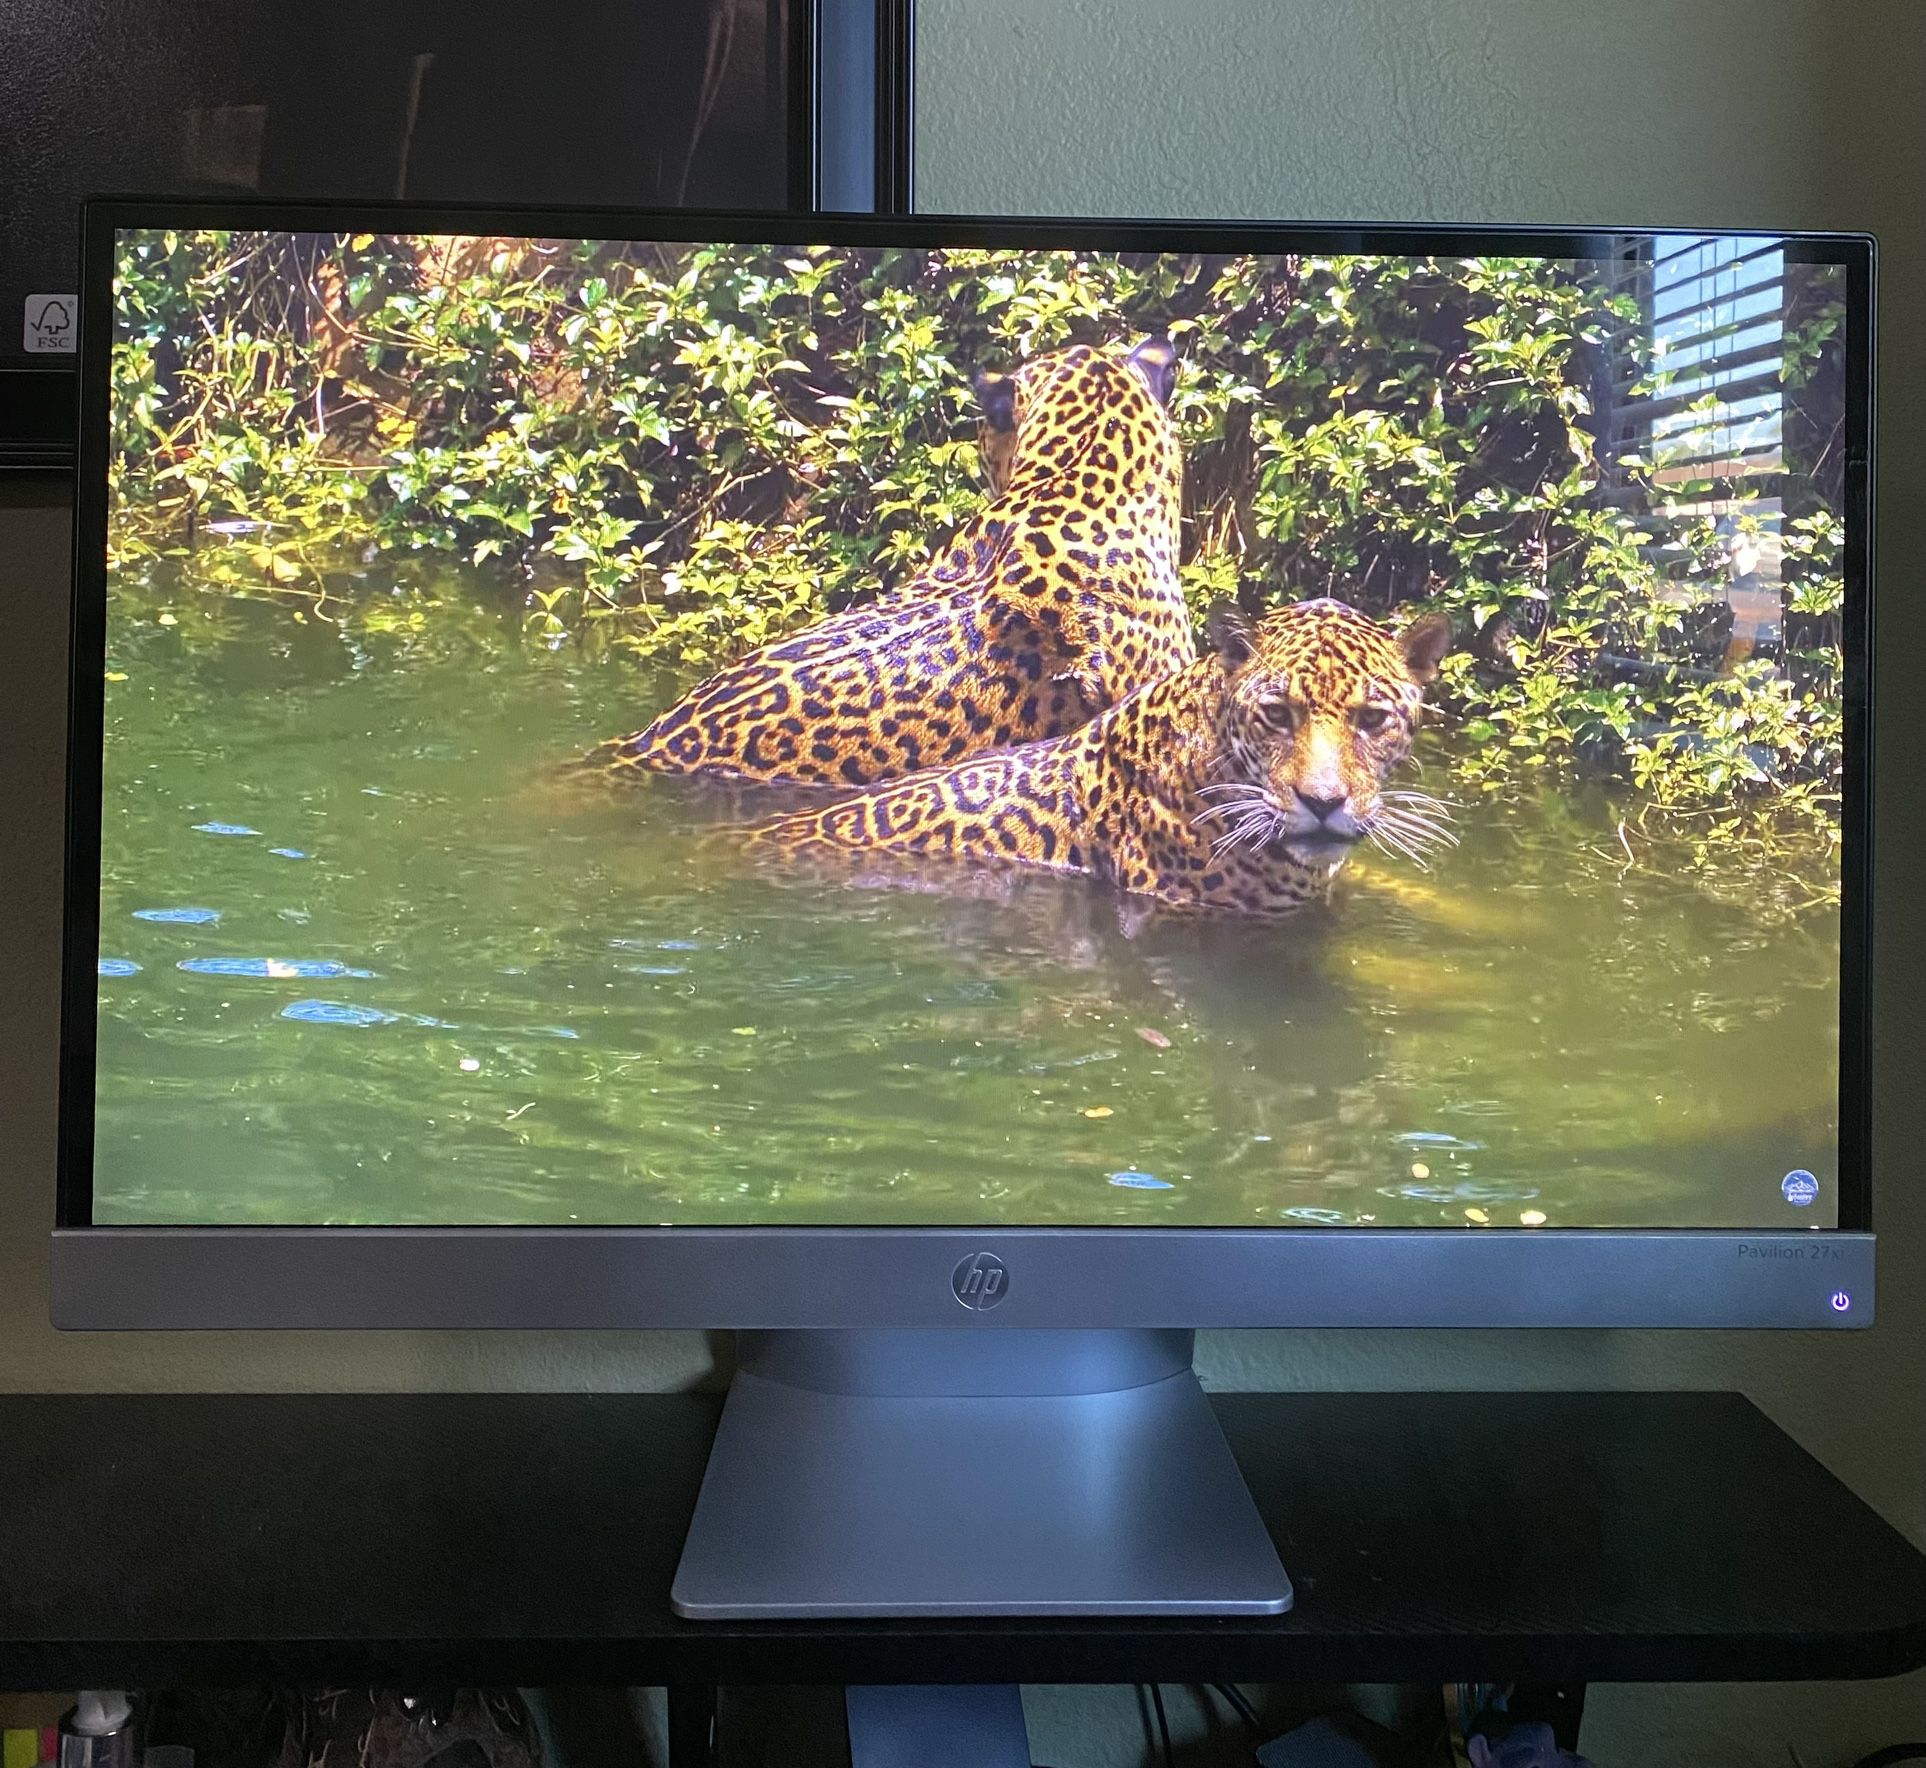 Monitor LED HP IPS Pavilion 27XI C4D27AA, 27 Full HD